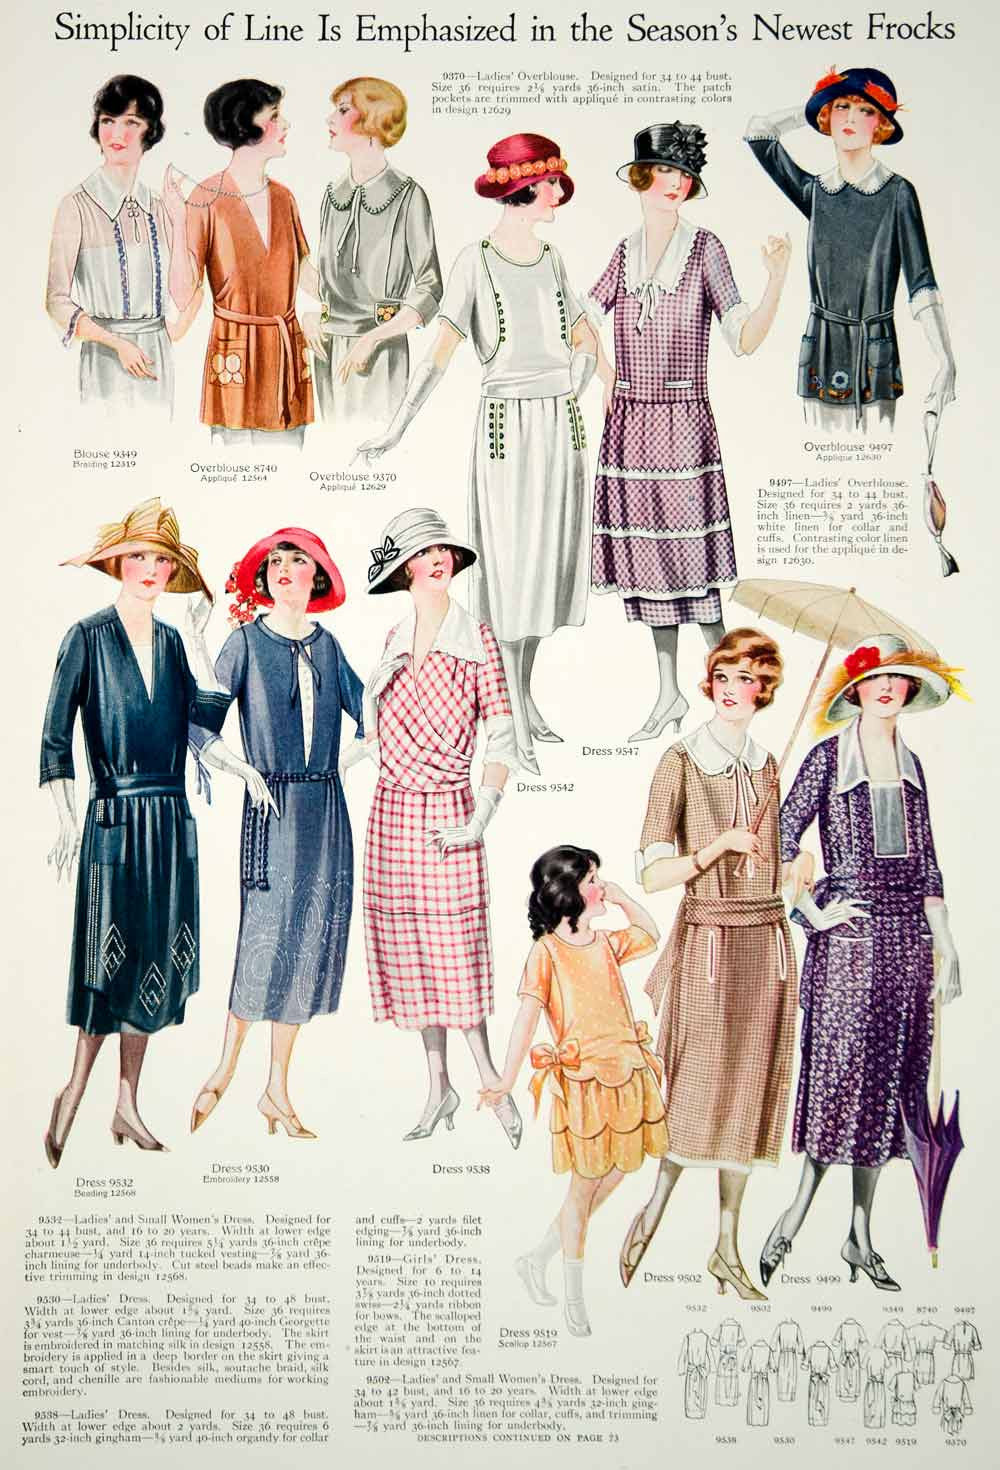 1921 Color Print 1920's Flapper Fashion Illustrations Summer Dresses Women Hats - Period Paper
